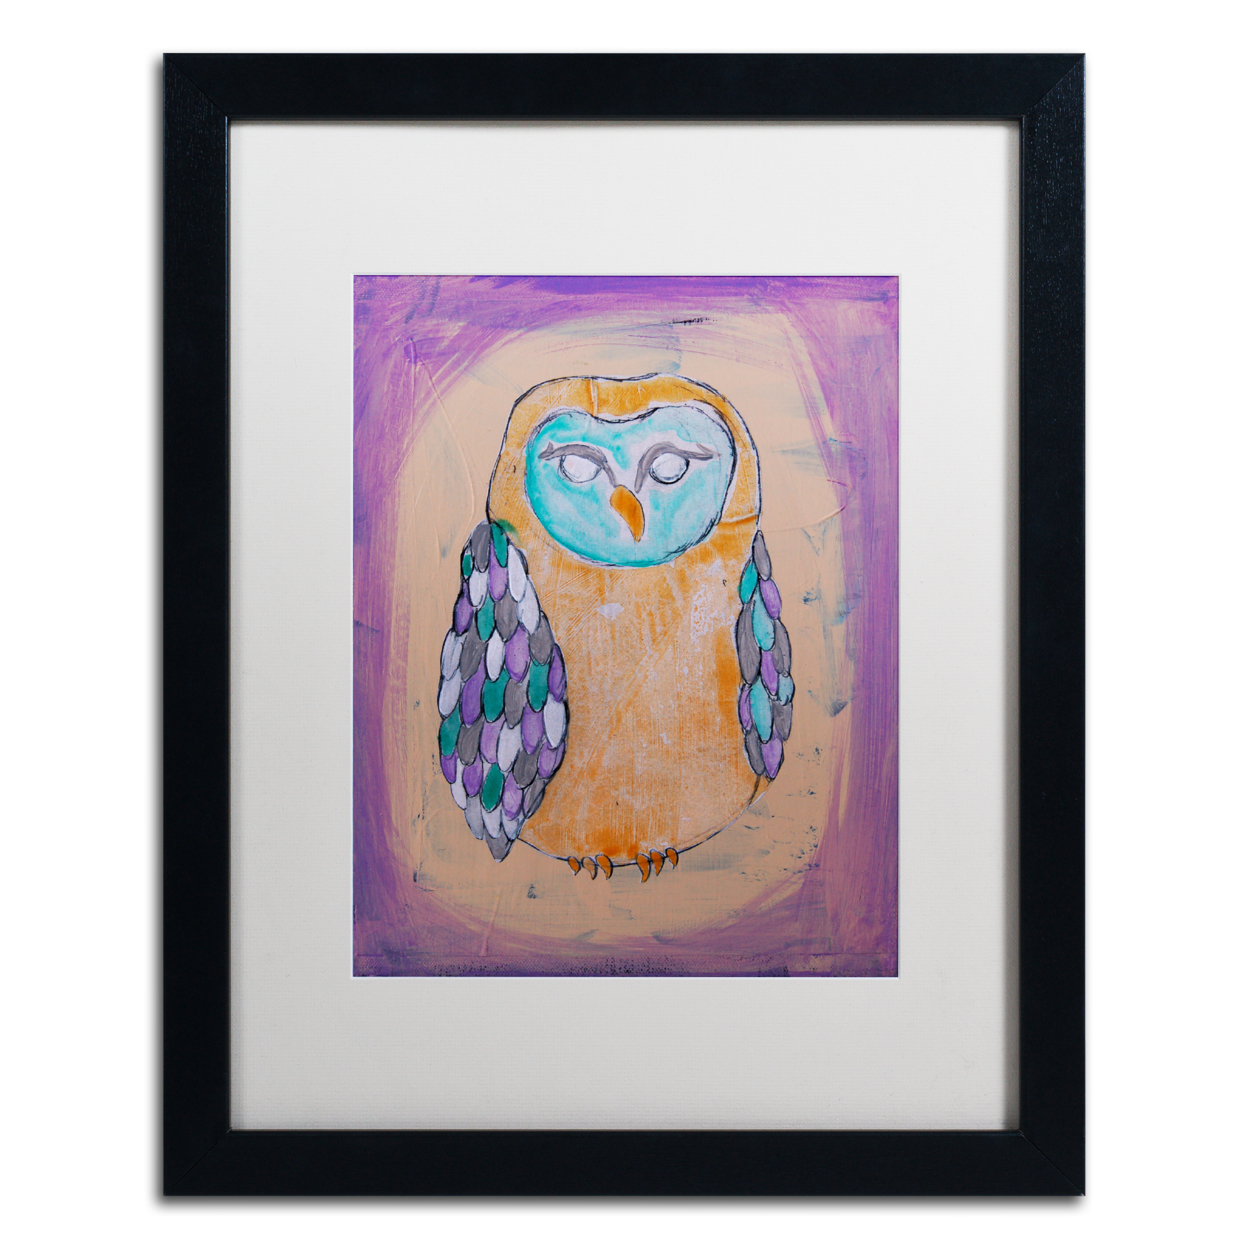 Nicole Dietz 'Owl I' Black Wooden Framed Art 18 X 22 Inches